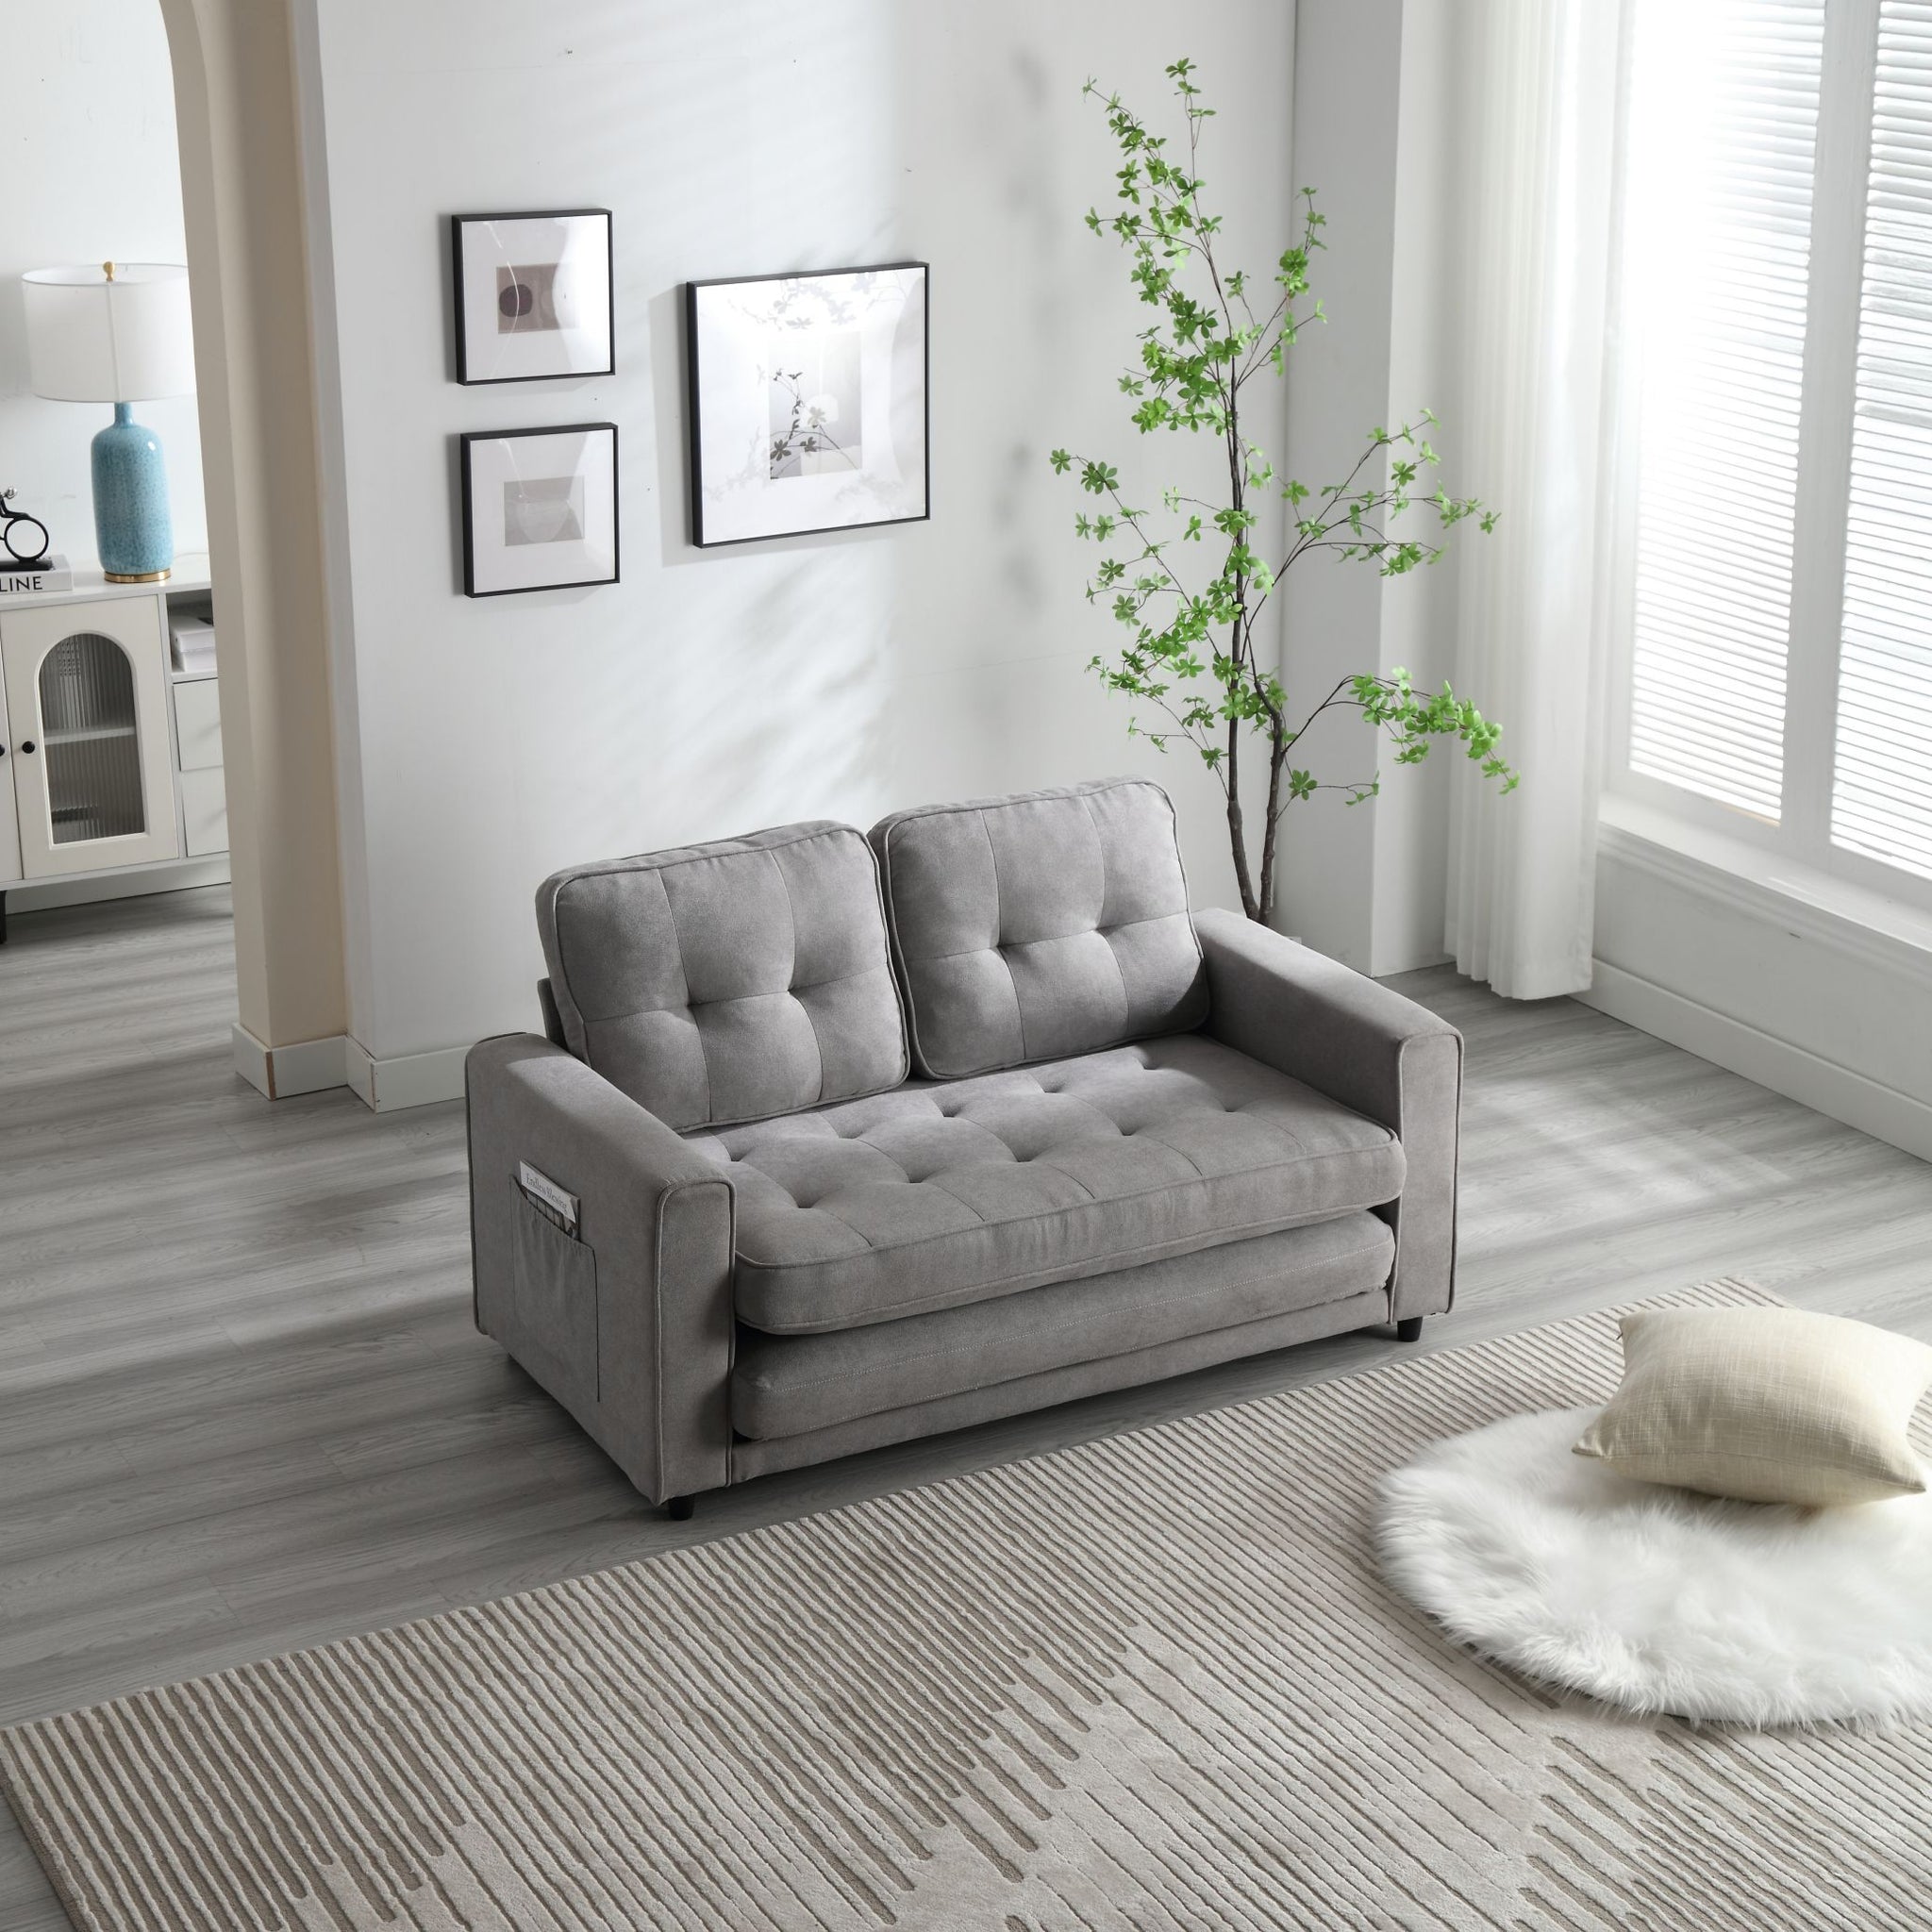 3 Fold Sofa,Convertible Futon Couch sleeper light gray-velvet-wood-primary living